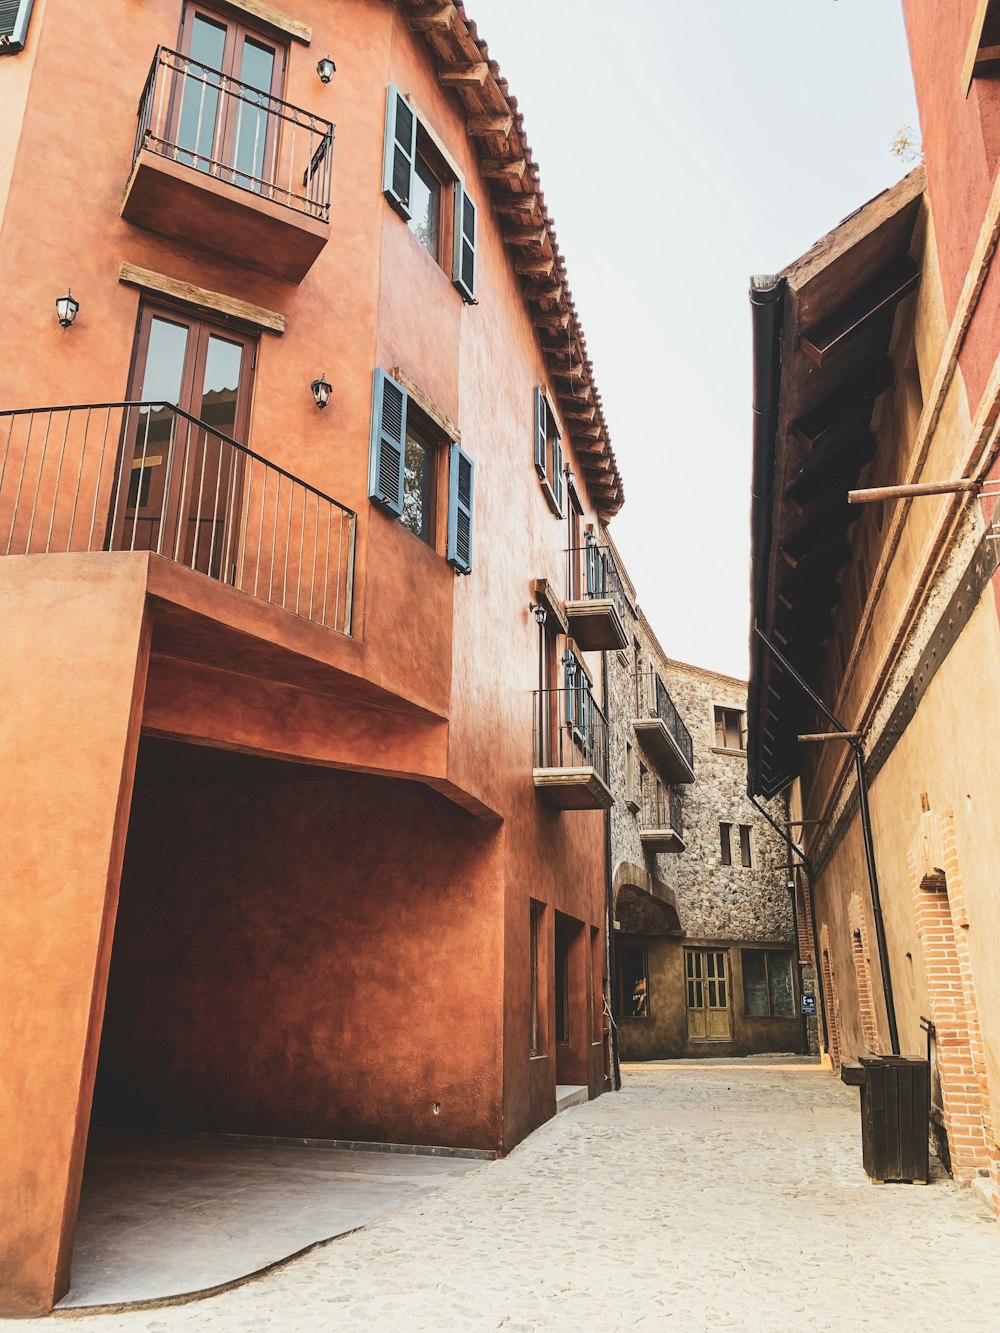 a narrow alleyway between two buildings with balconies